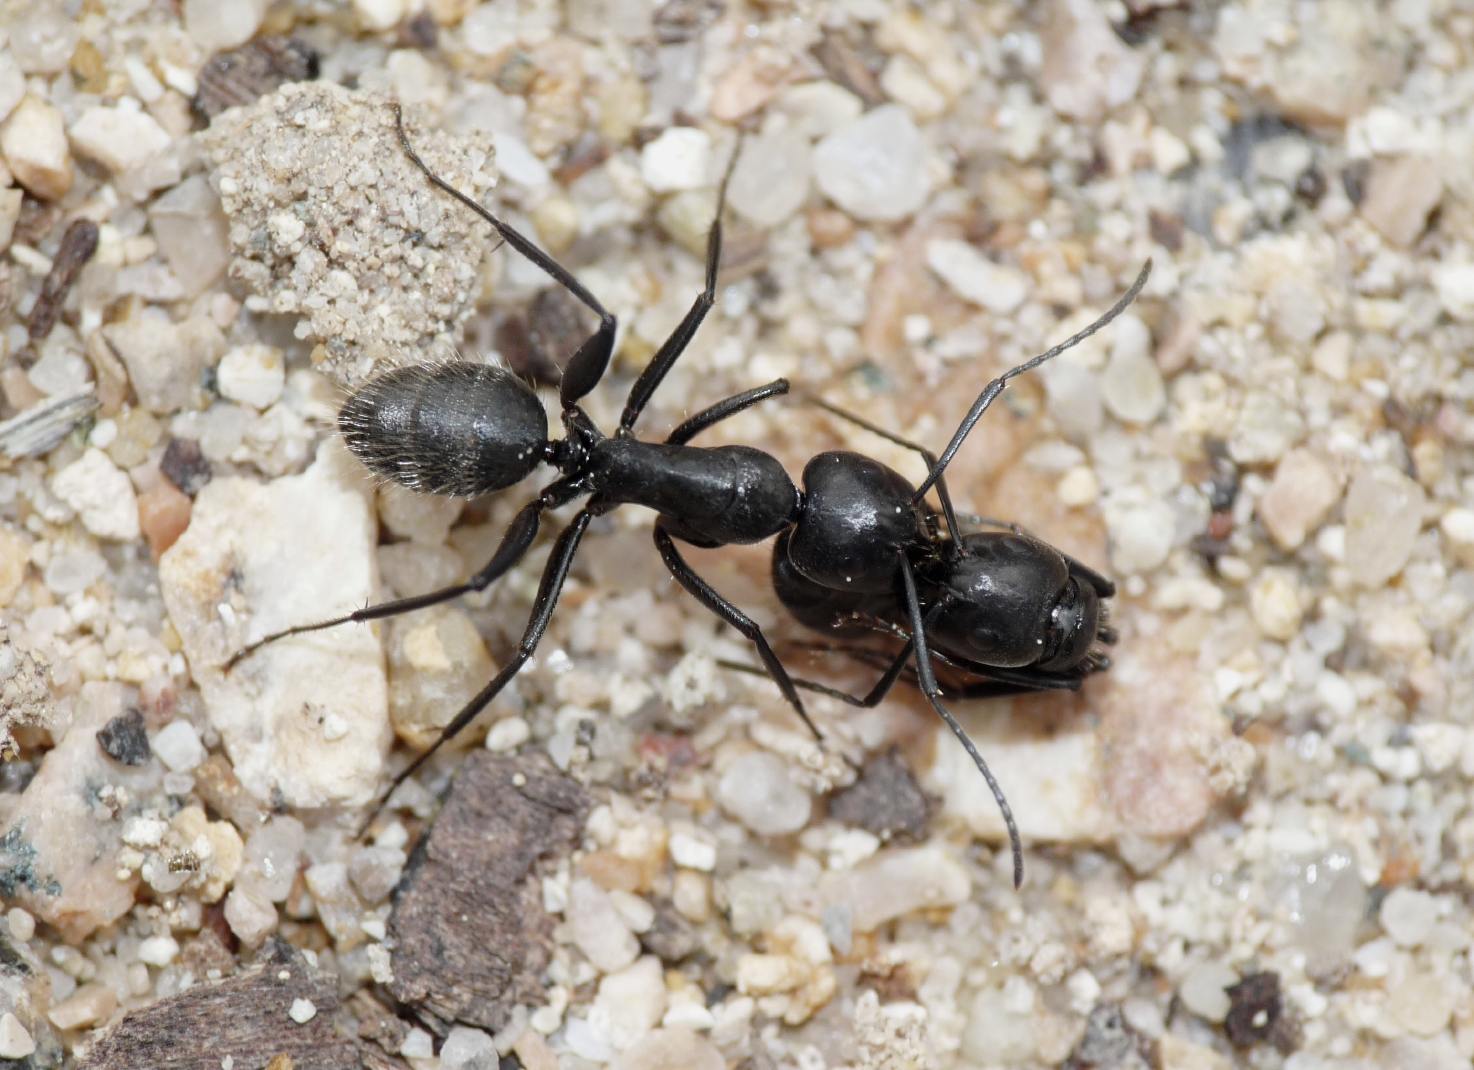 Camponotus vagus: foto ravvicinate